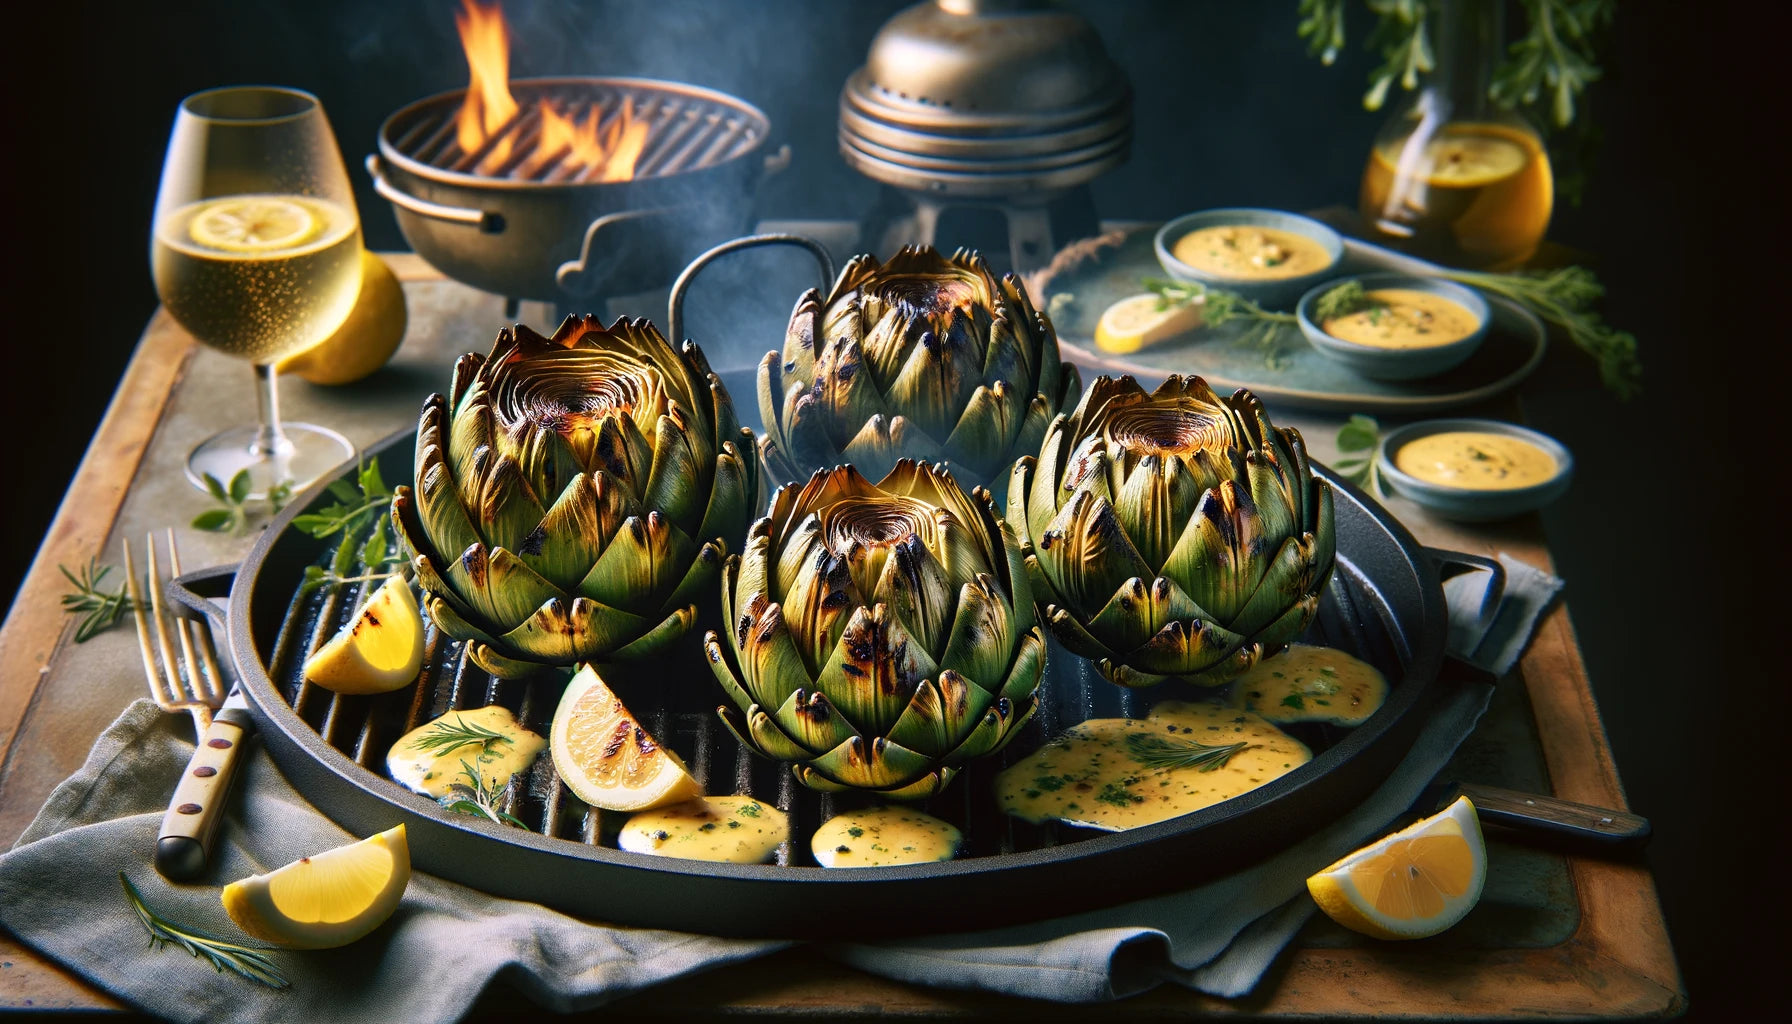 Ultimate Grilled Artichokes with Lemon Vinaigrette Recipe | Arteflame Grill